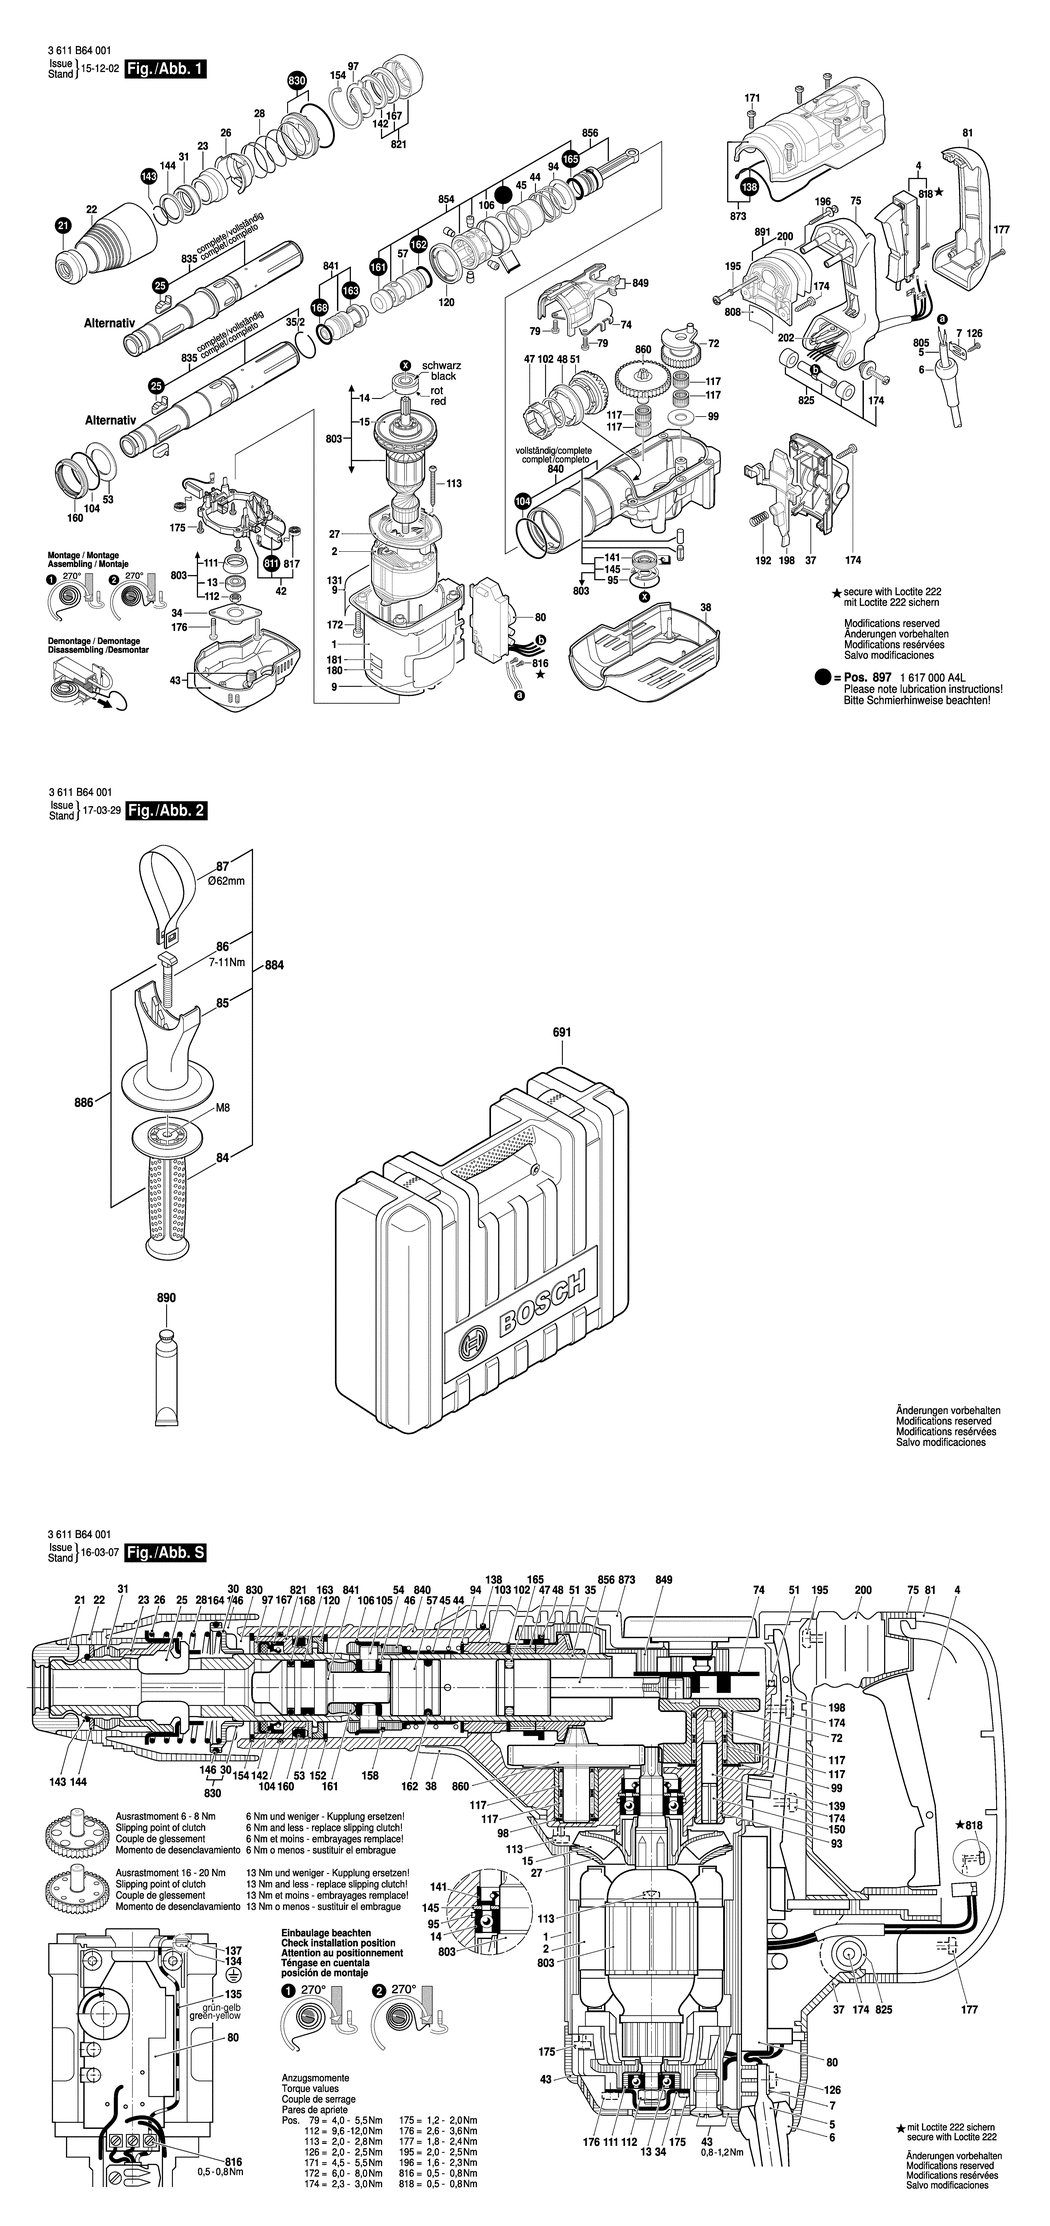 Bosch GBH 5-40 DCE / 3611B64001 / EU 230 Volt Spare Parts